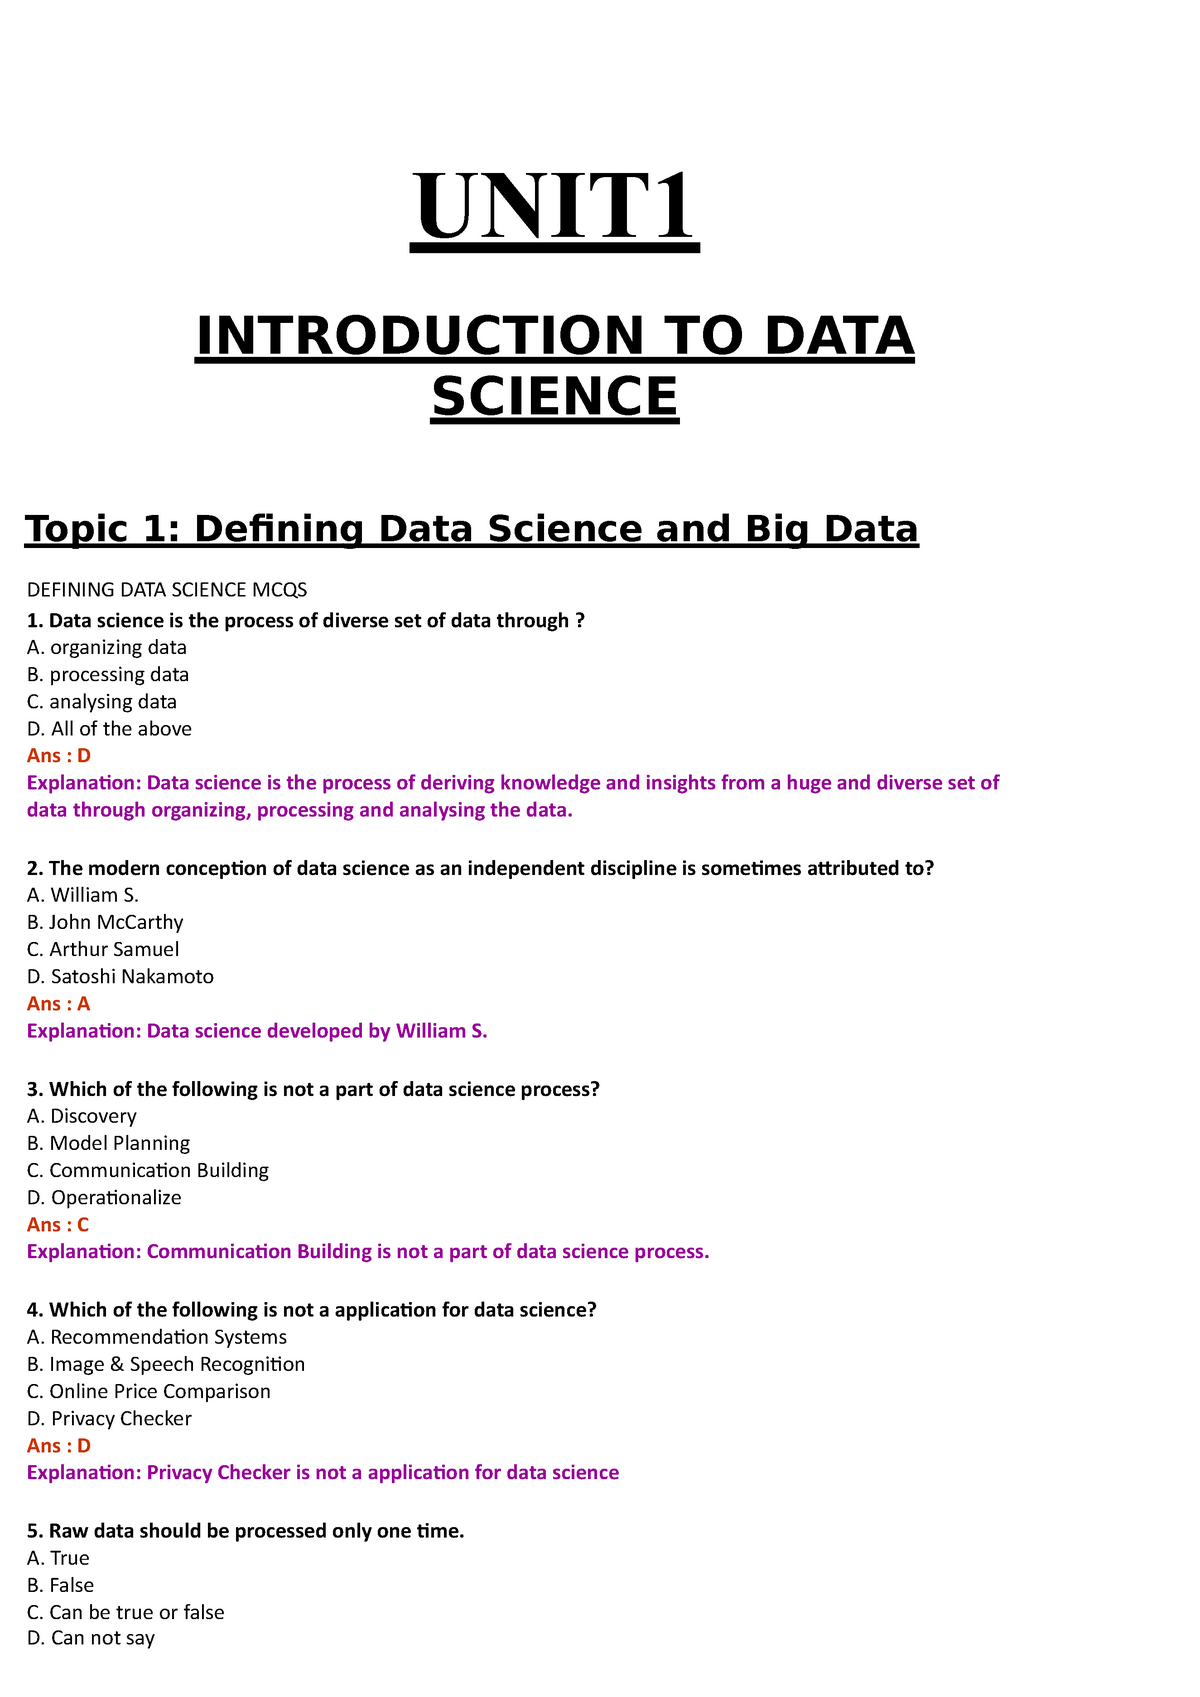 data representation notes class 11 pdf